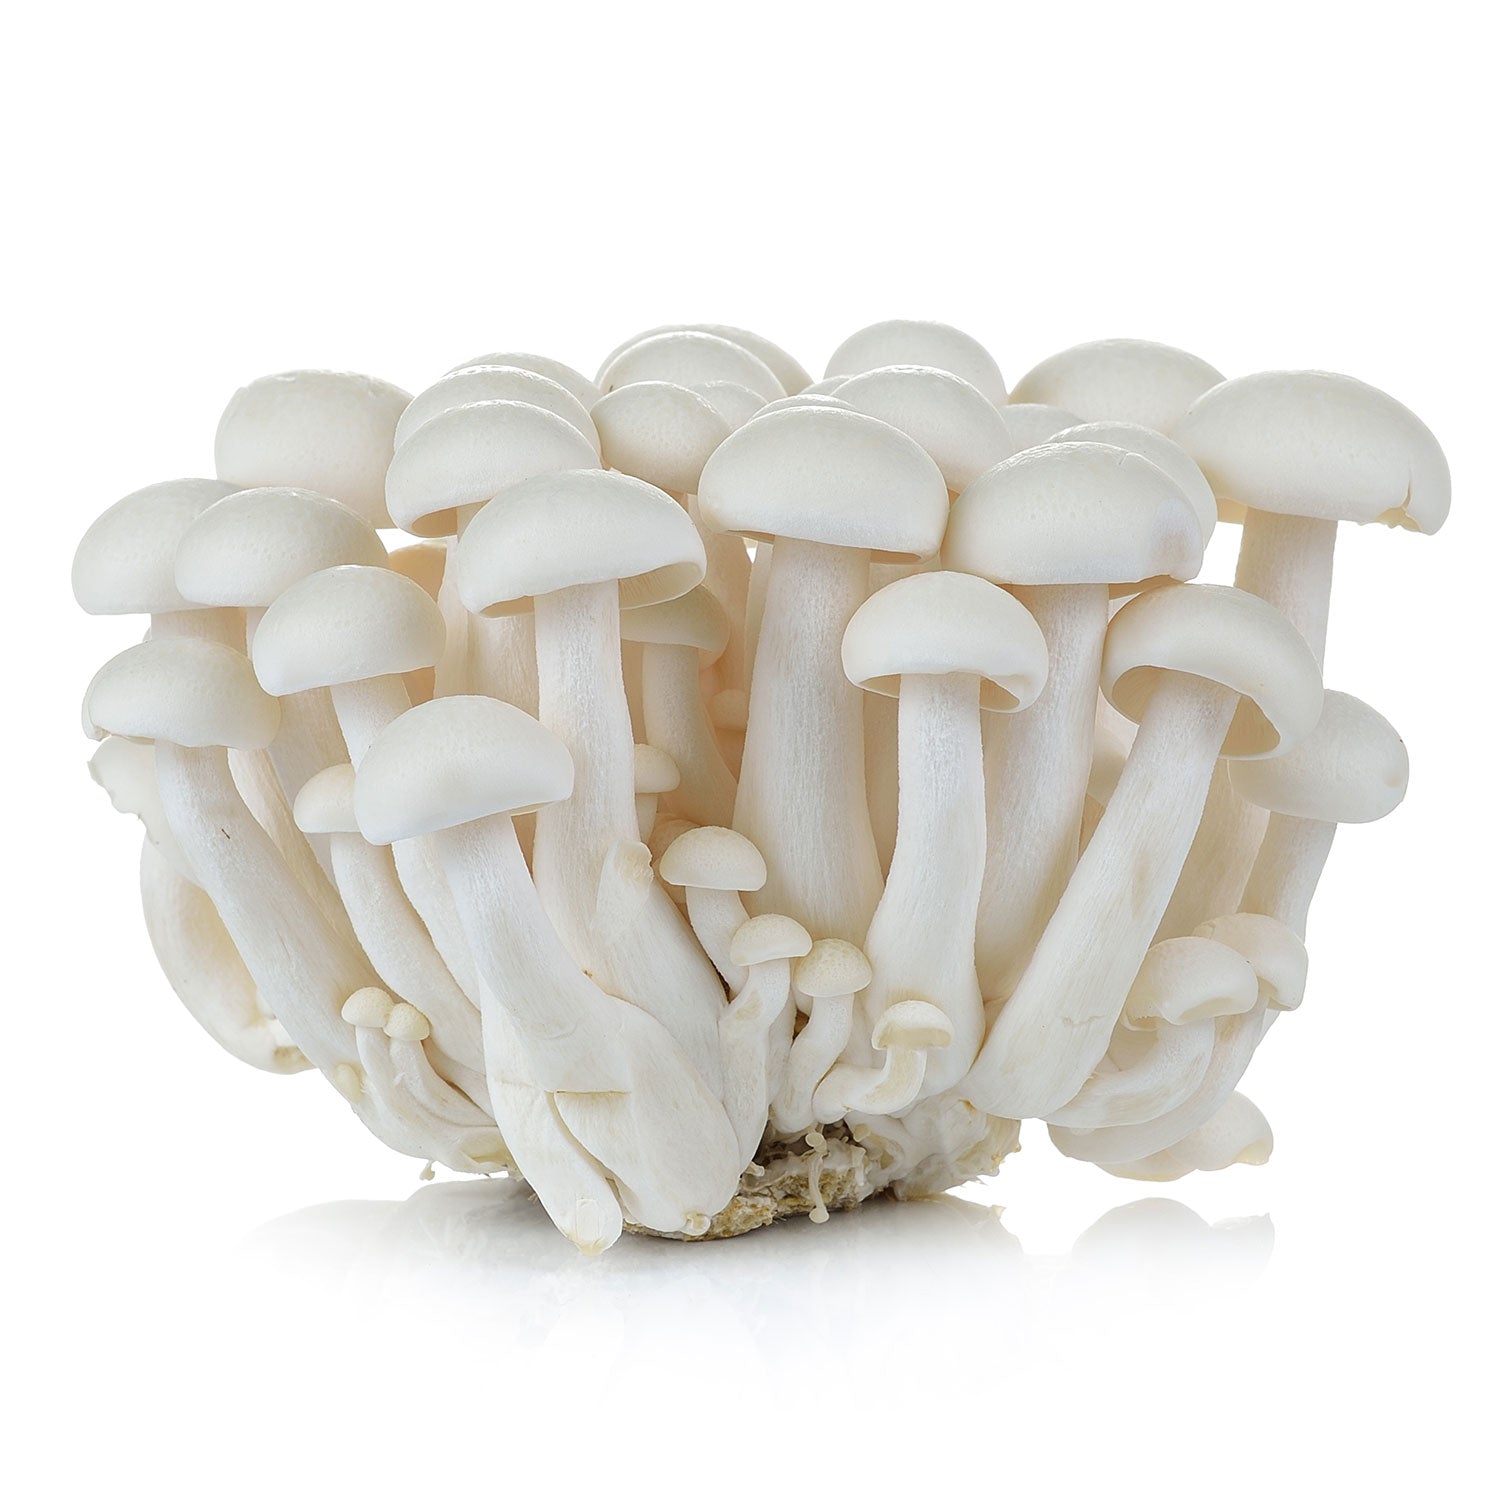 白玉菇 white beech mushroom 150g